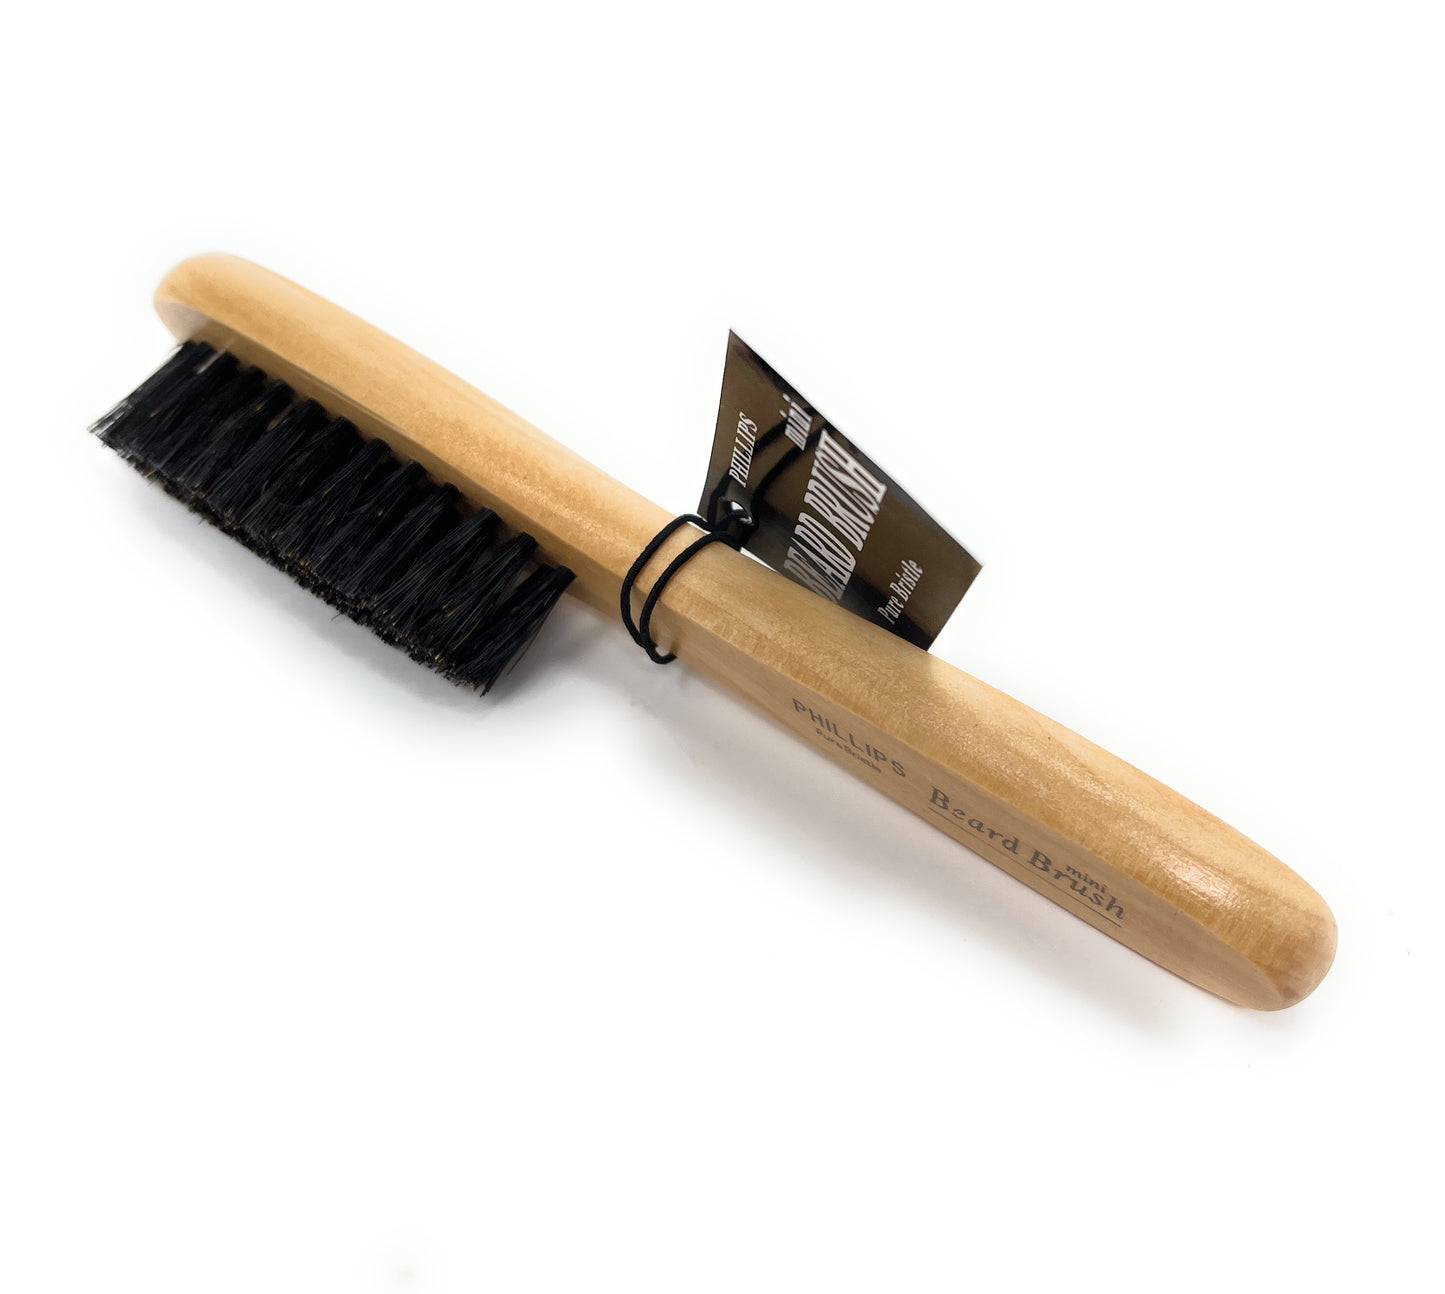 Phillips Mini Beard Brush military Wood Bristle Beard Brush Style For Short Hair 1 Pc.